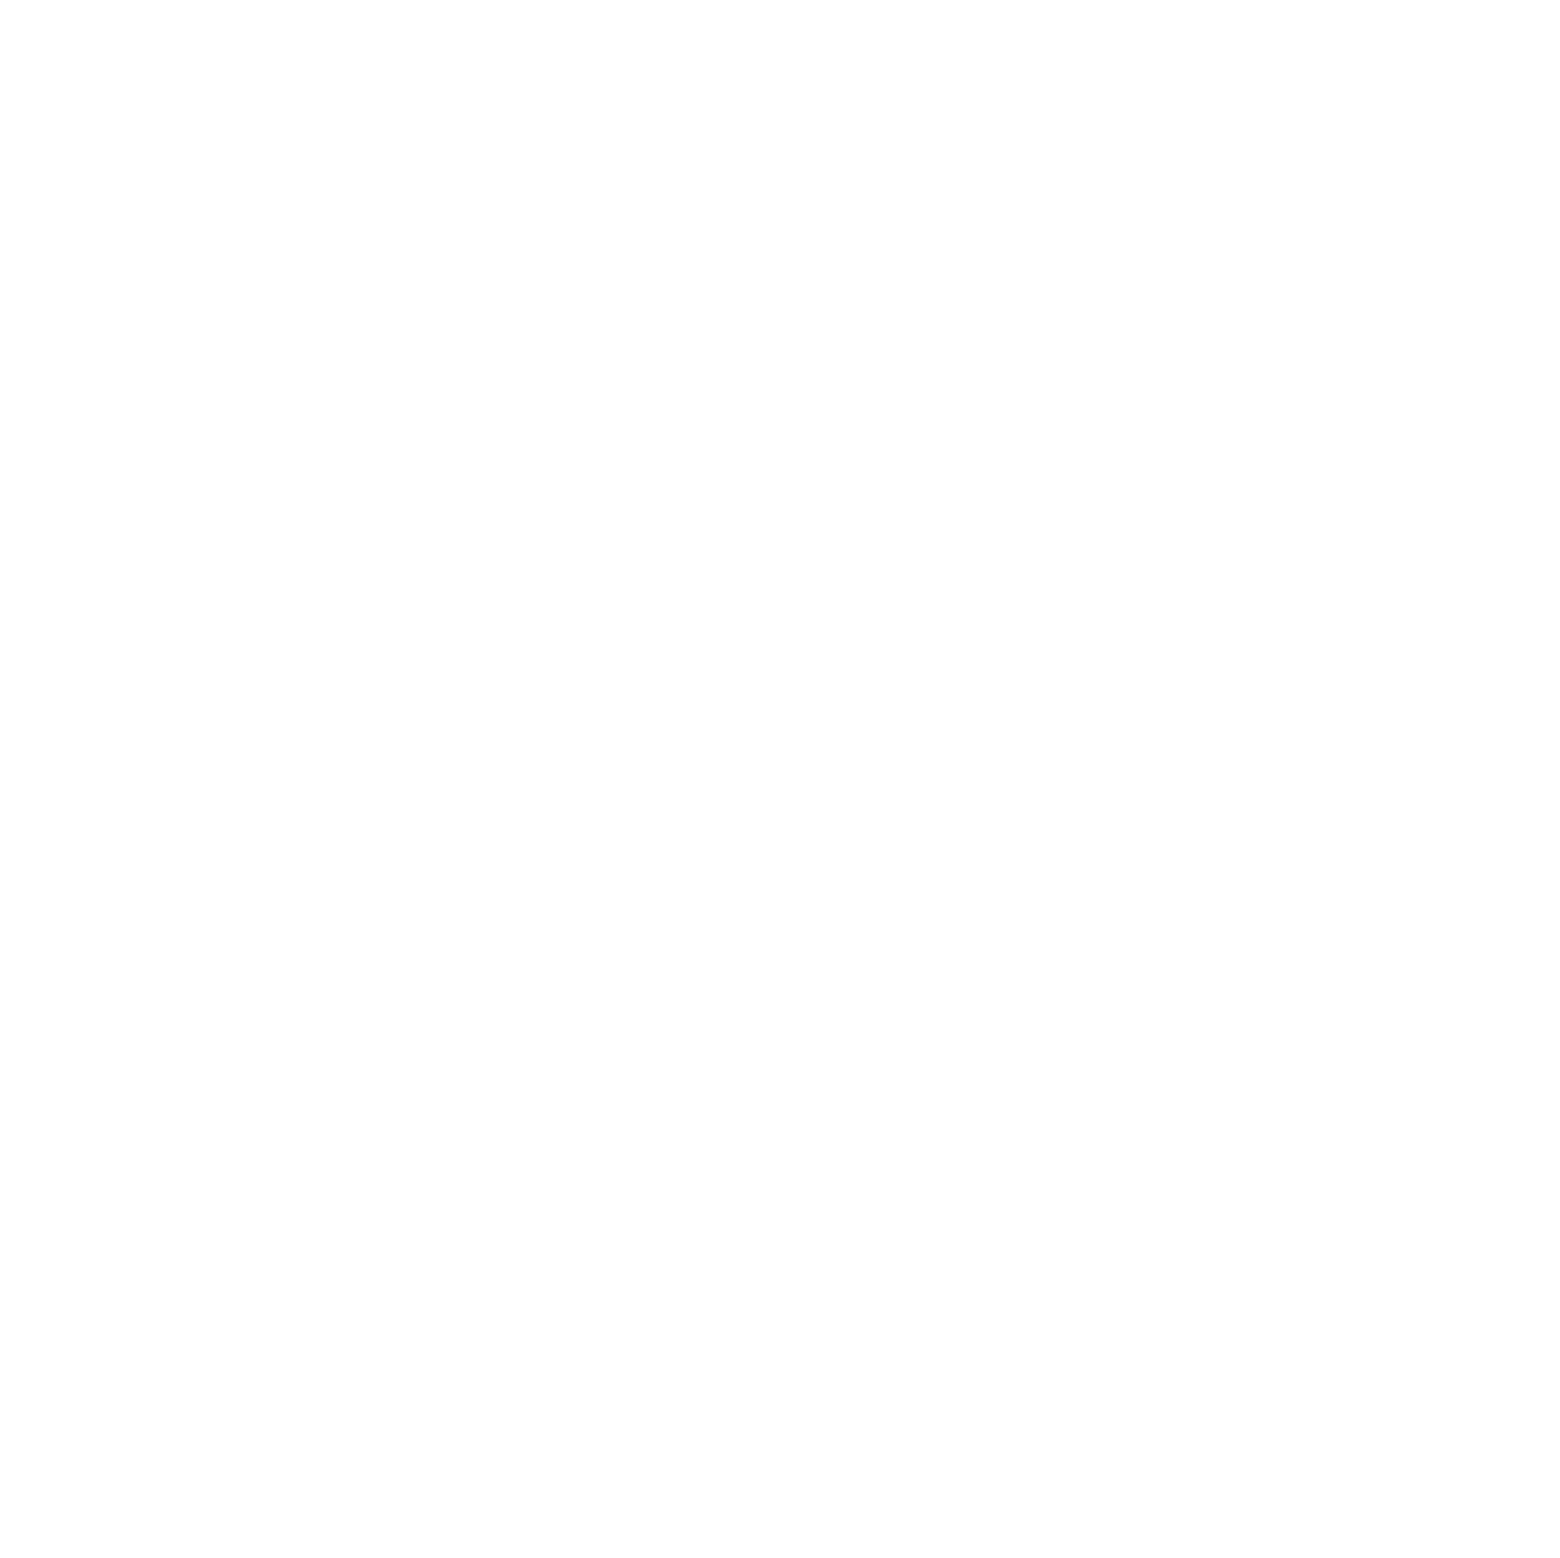 Power Corporation of Canada logo pour fonds sombres (PNG transparent)